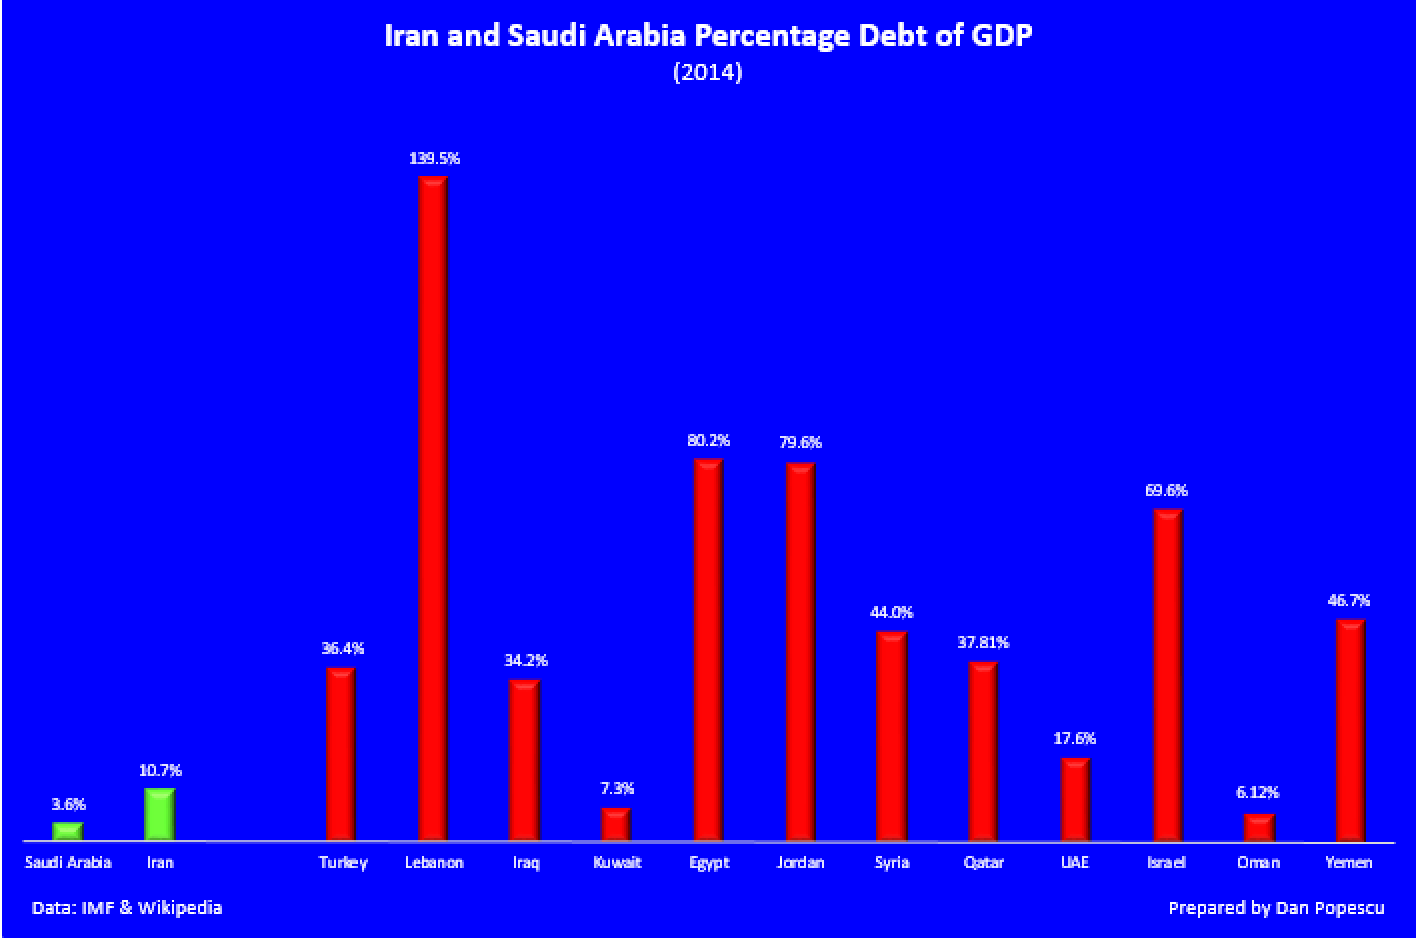 Iran and Saudi Arabia percentage debt of GDP